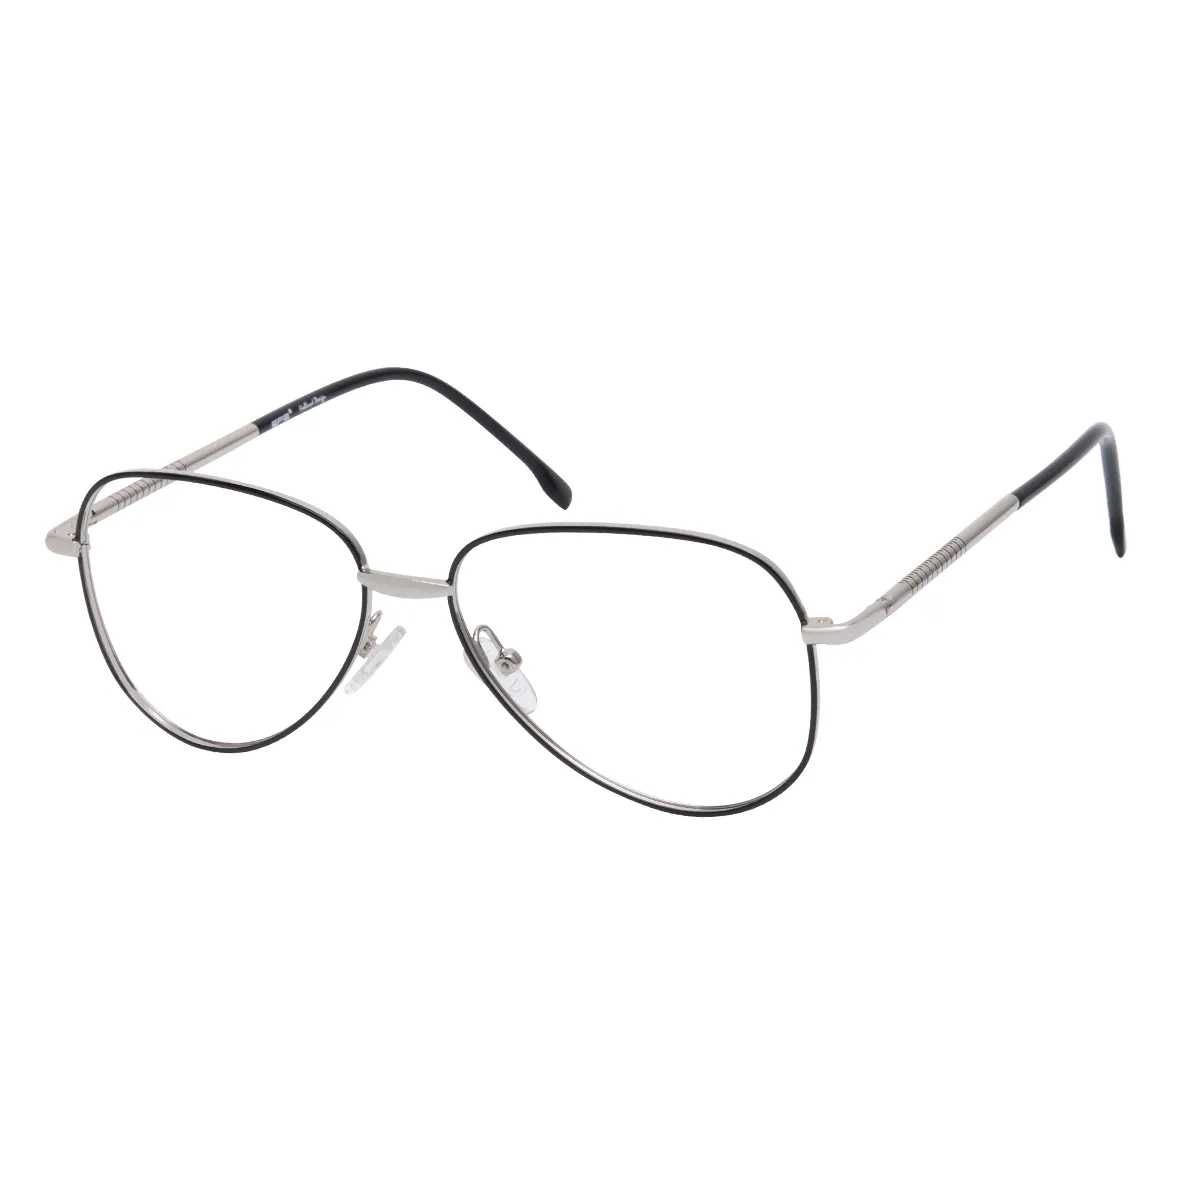 Timothy - Geometric Silver Glasses for Men & Women